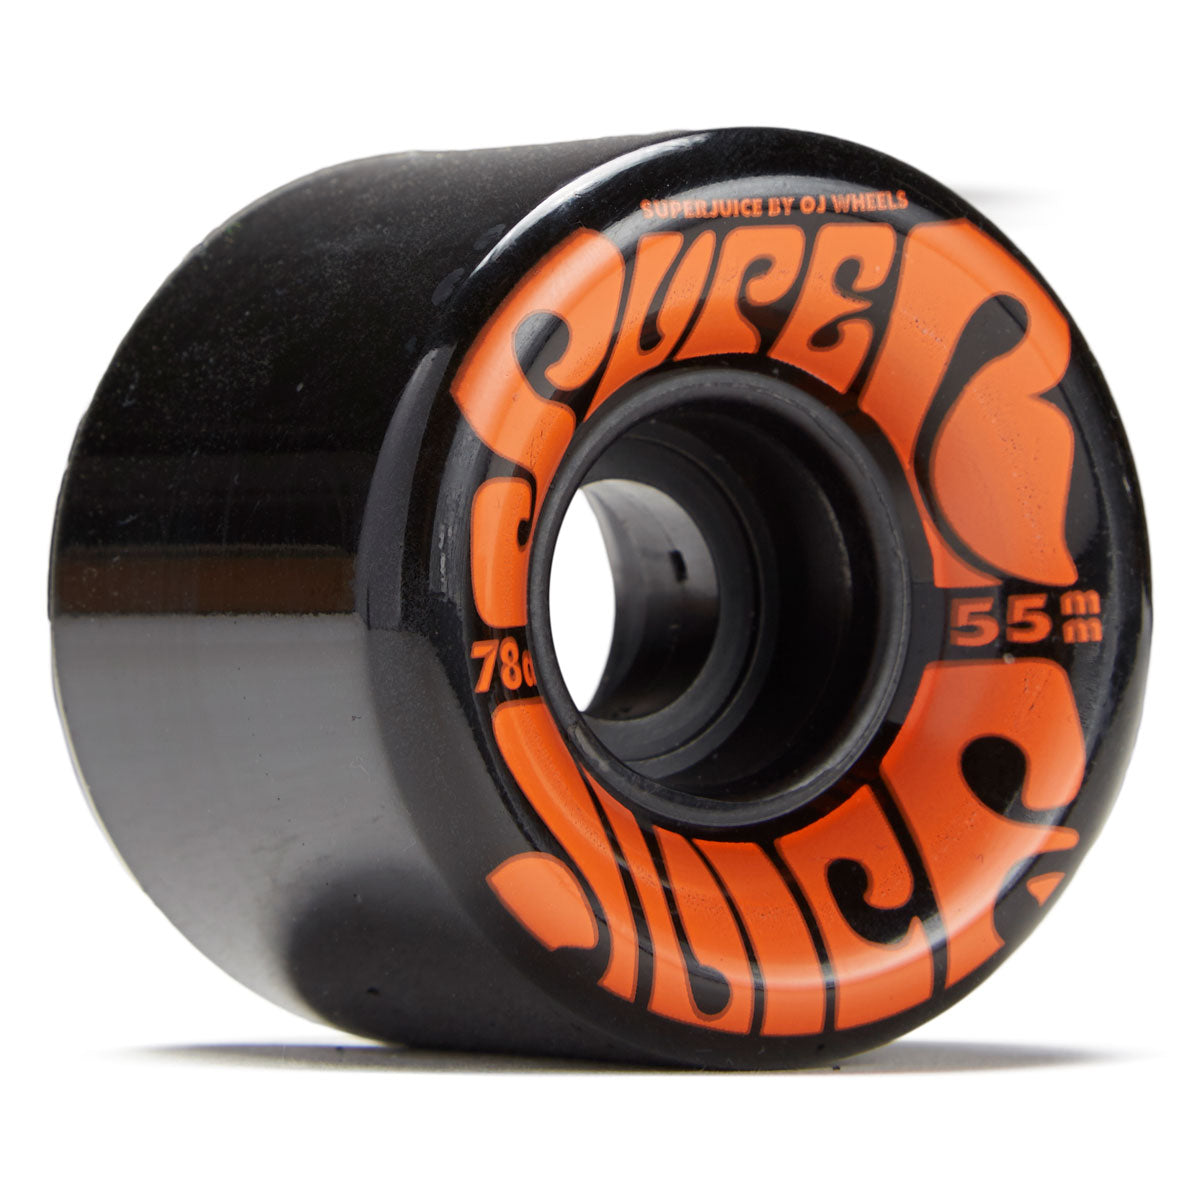 OJ Mini Super Juice 78a Skateboard Wheels - Black - 55mm image 1